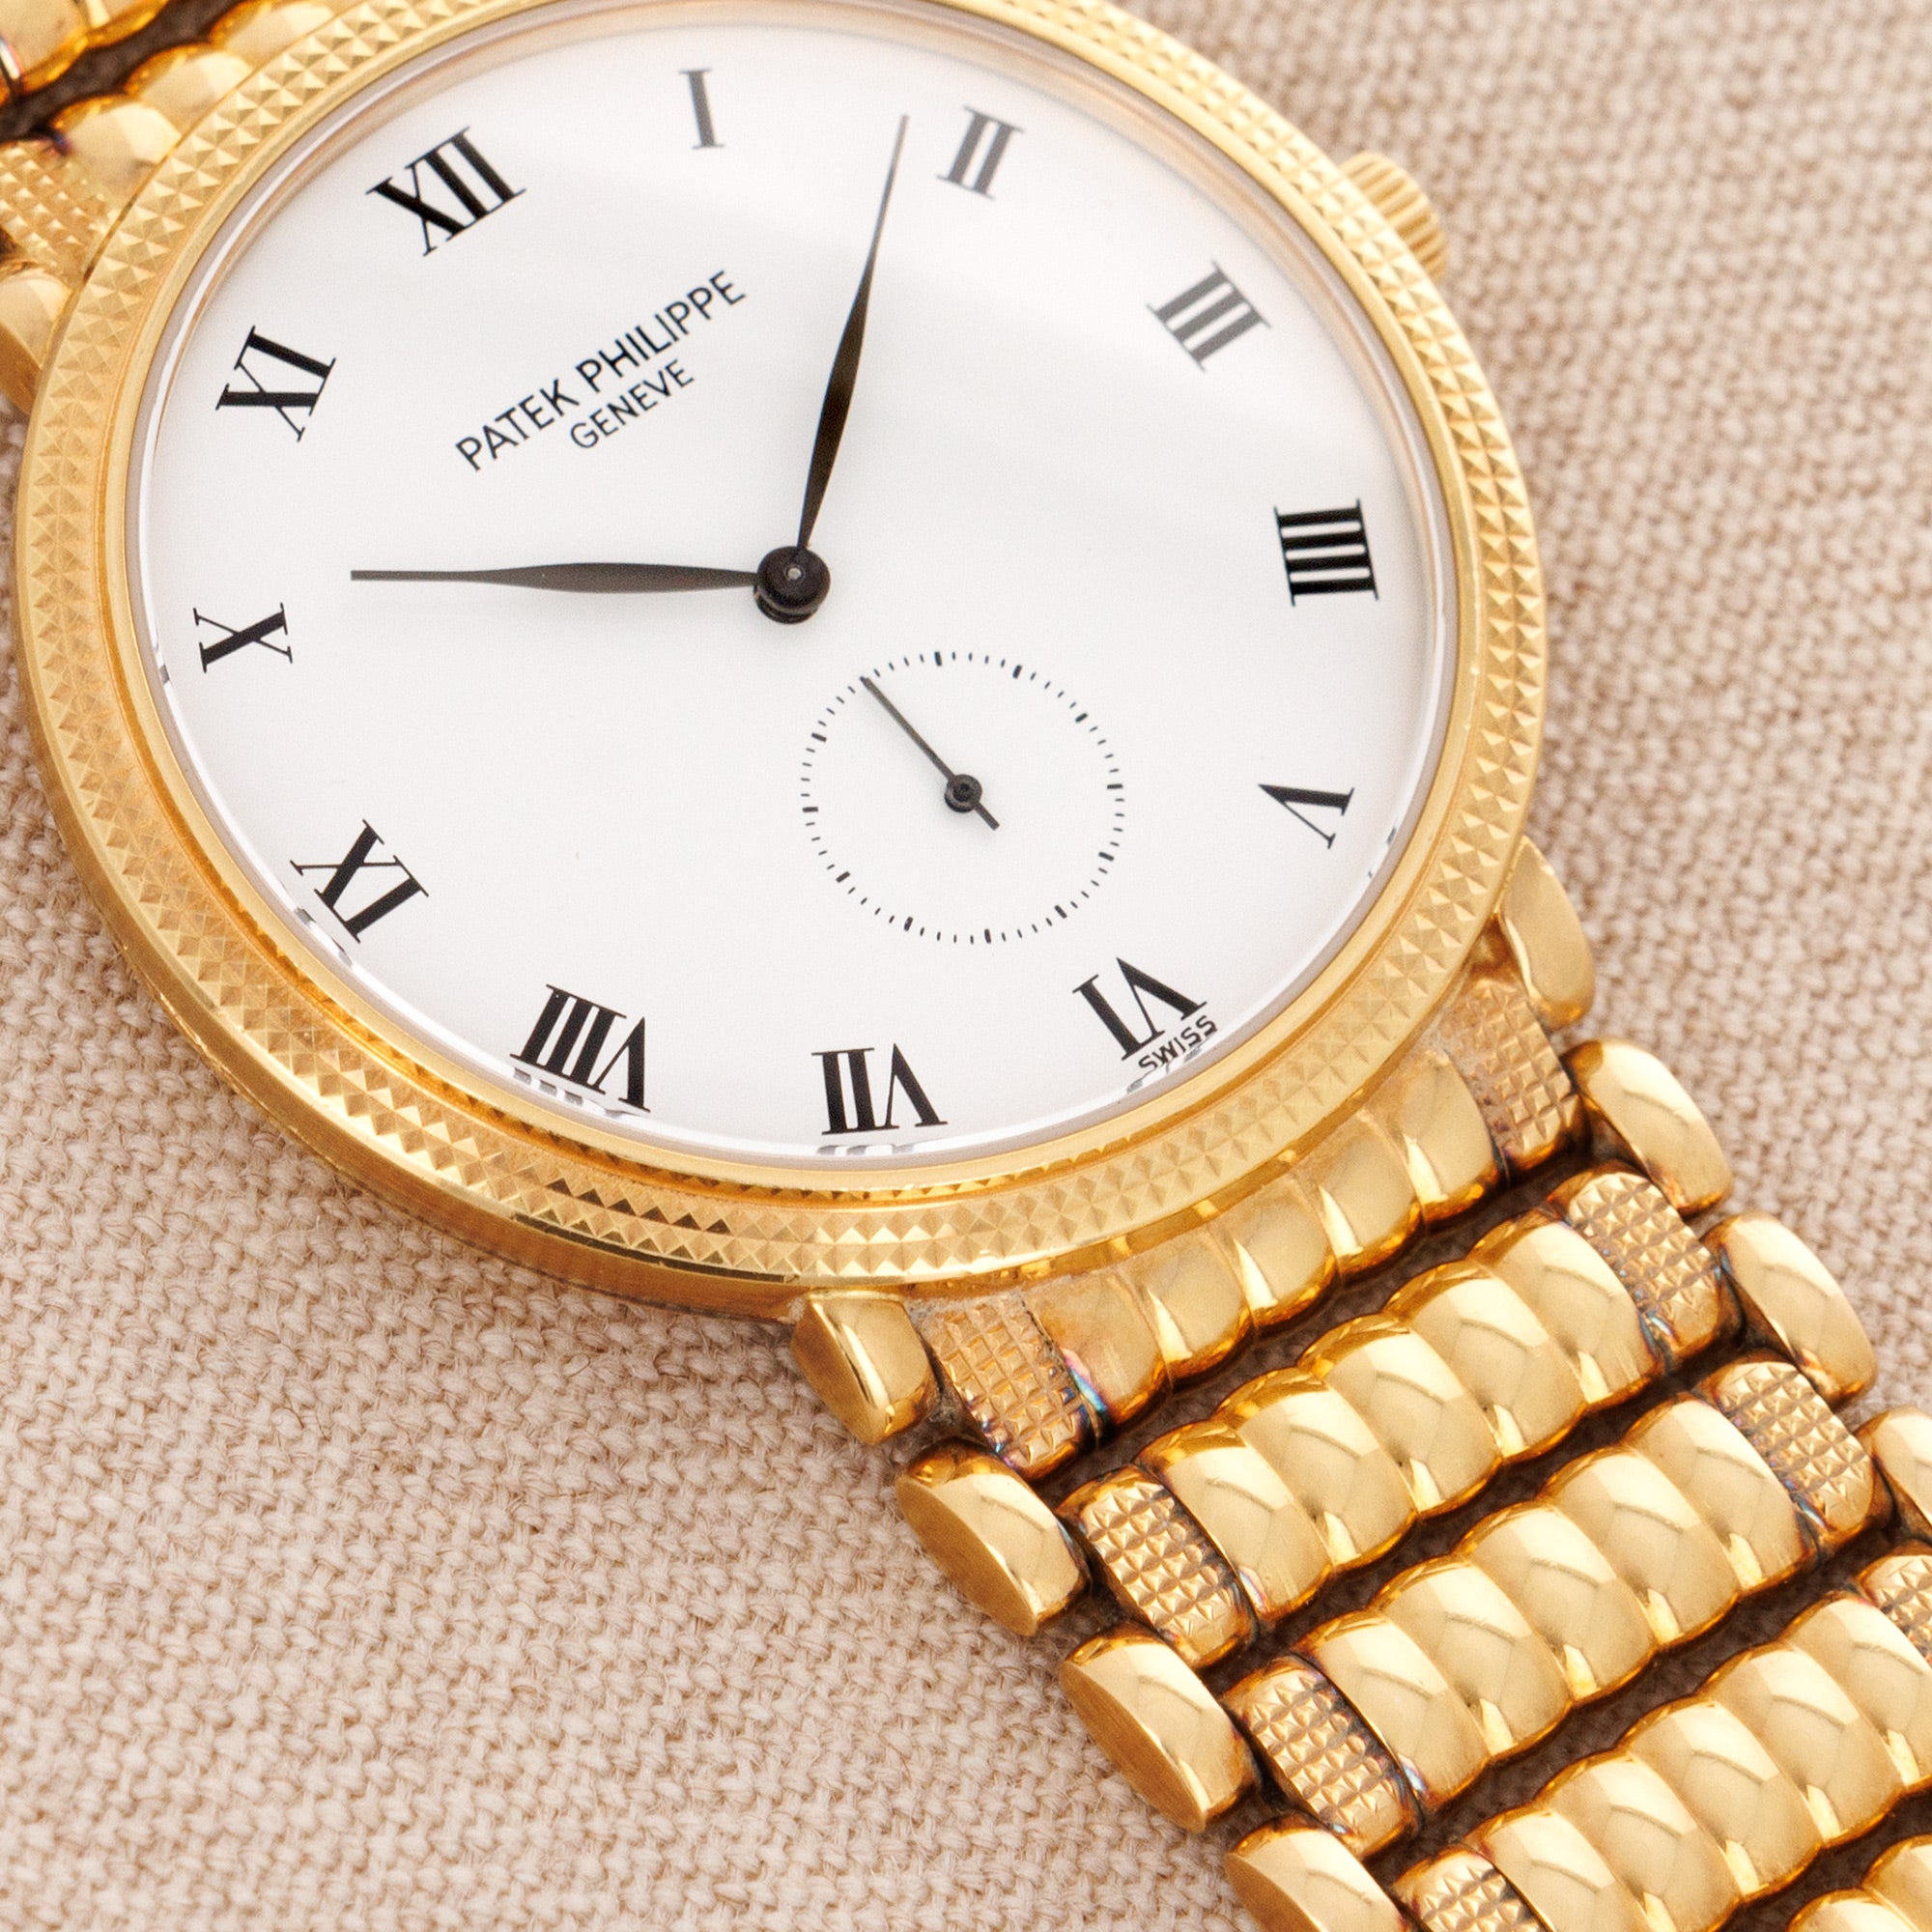 Patek Philippe - Patek Philippe Yellow Gold Calatrava Ref. 3919 on a Bracelet - The Keystone Watches